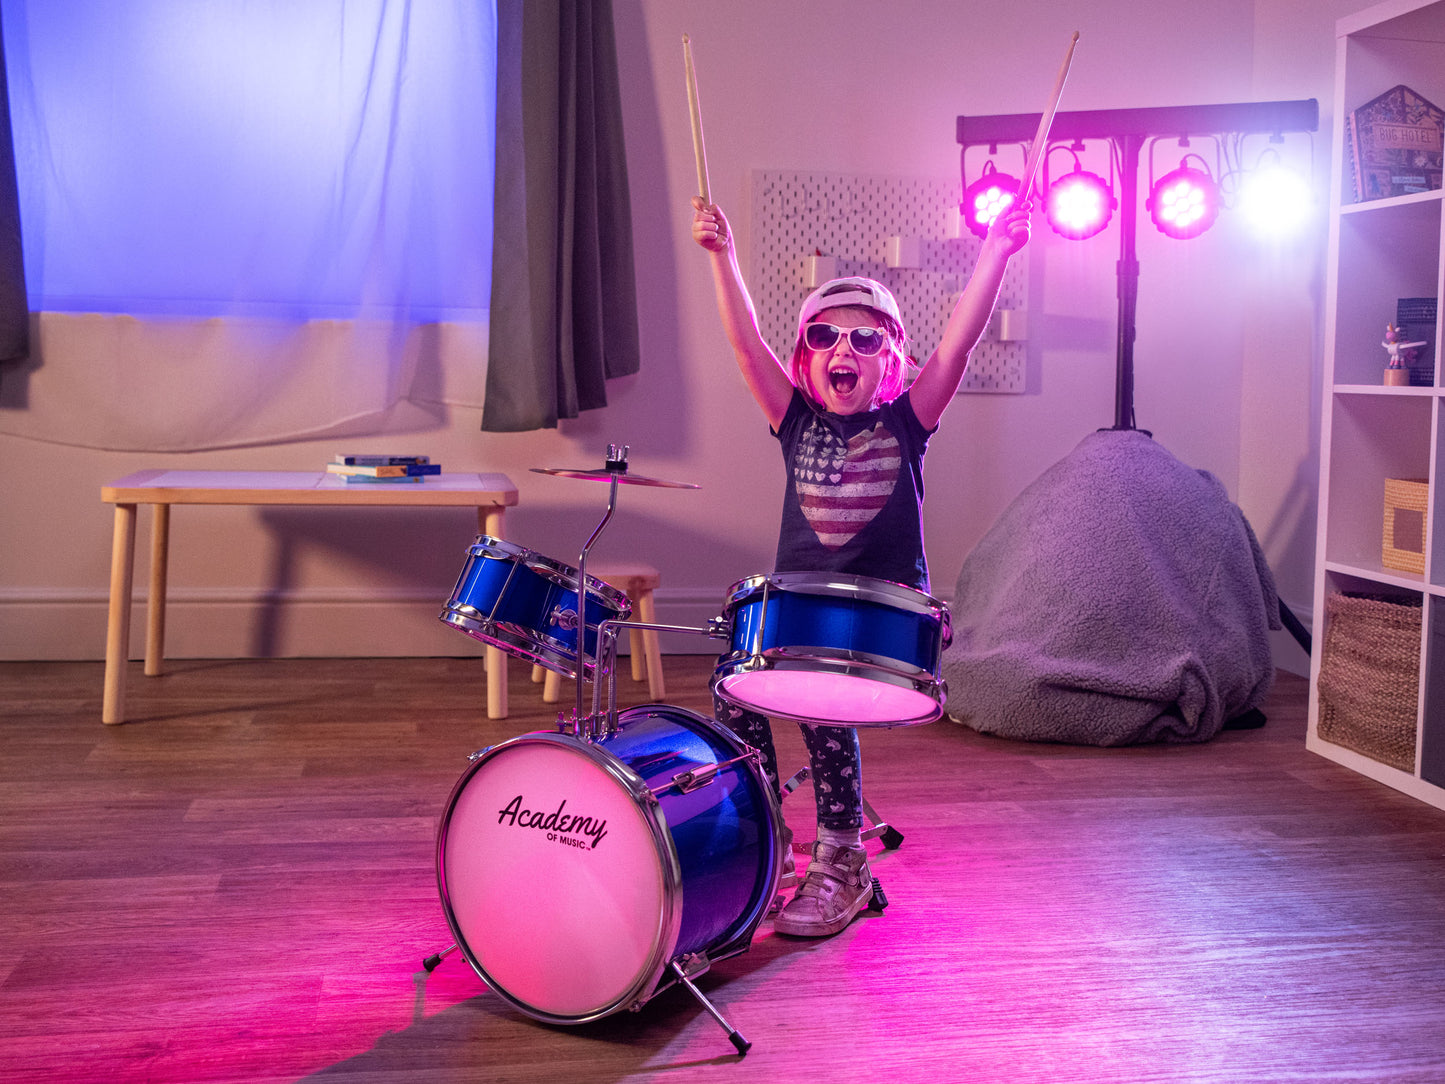 Academy of Music 3 Piece Drum Kit For Children